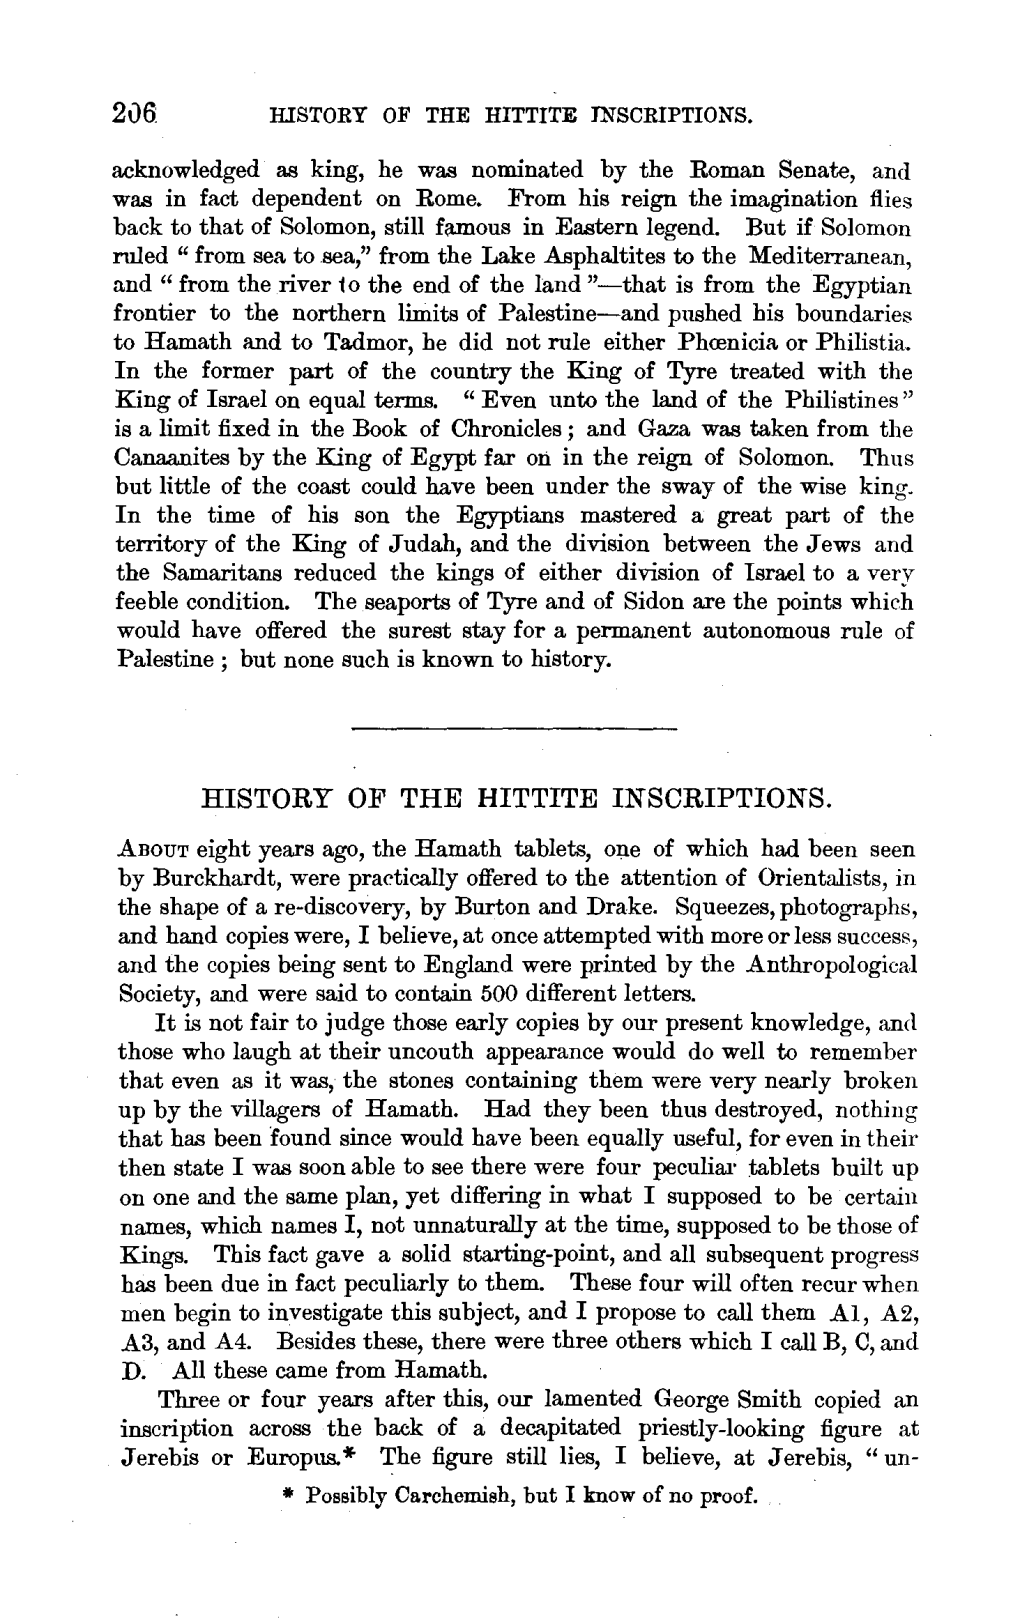 History of the Hittite Inscriptions